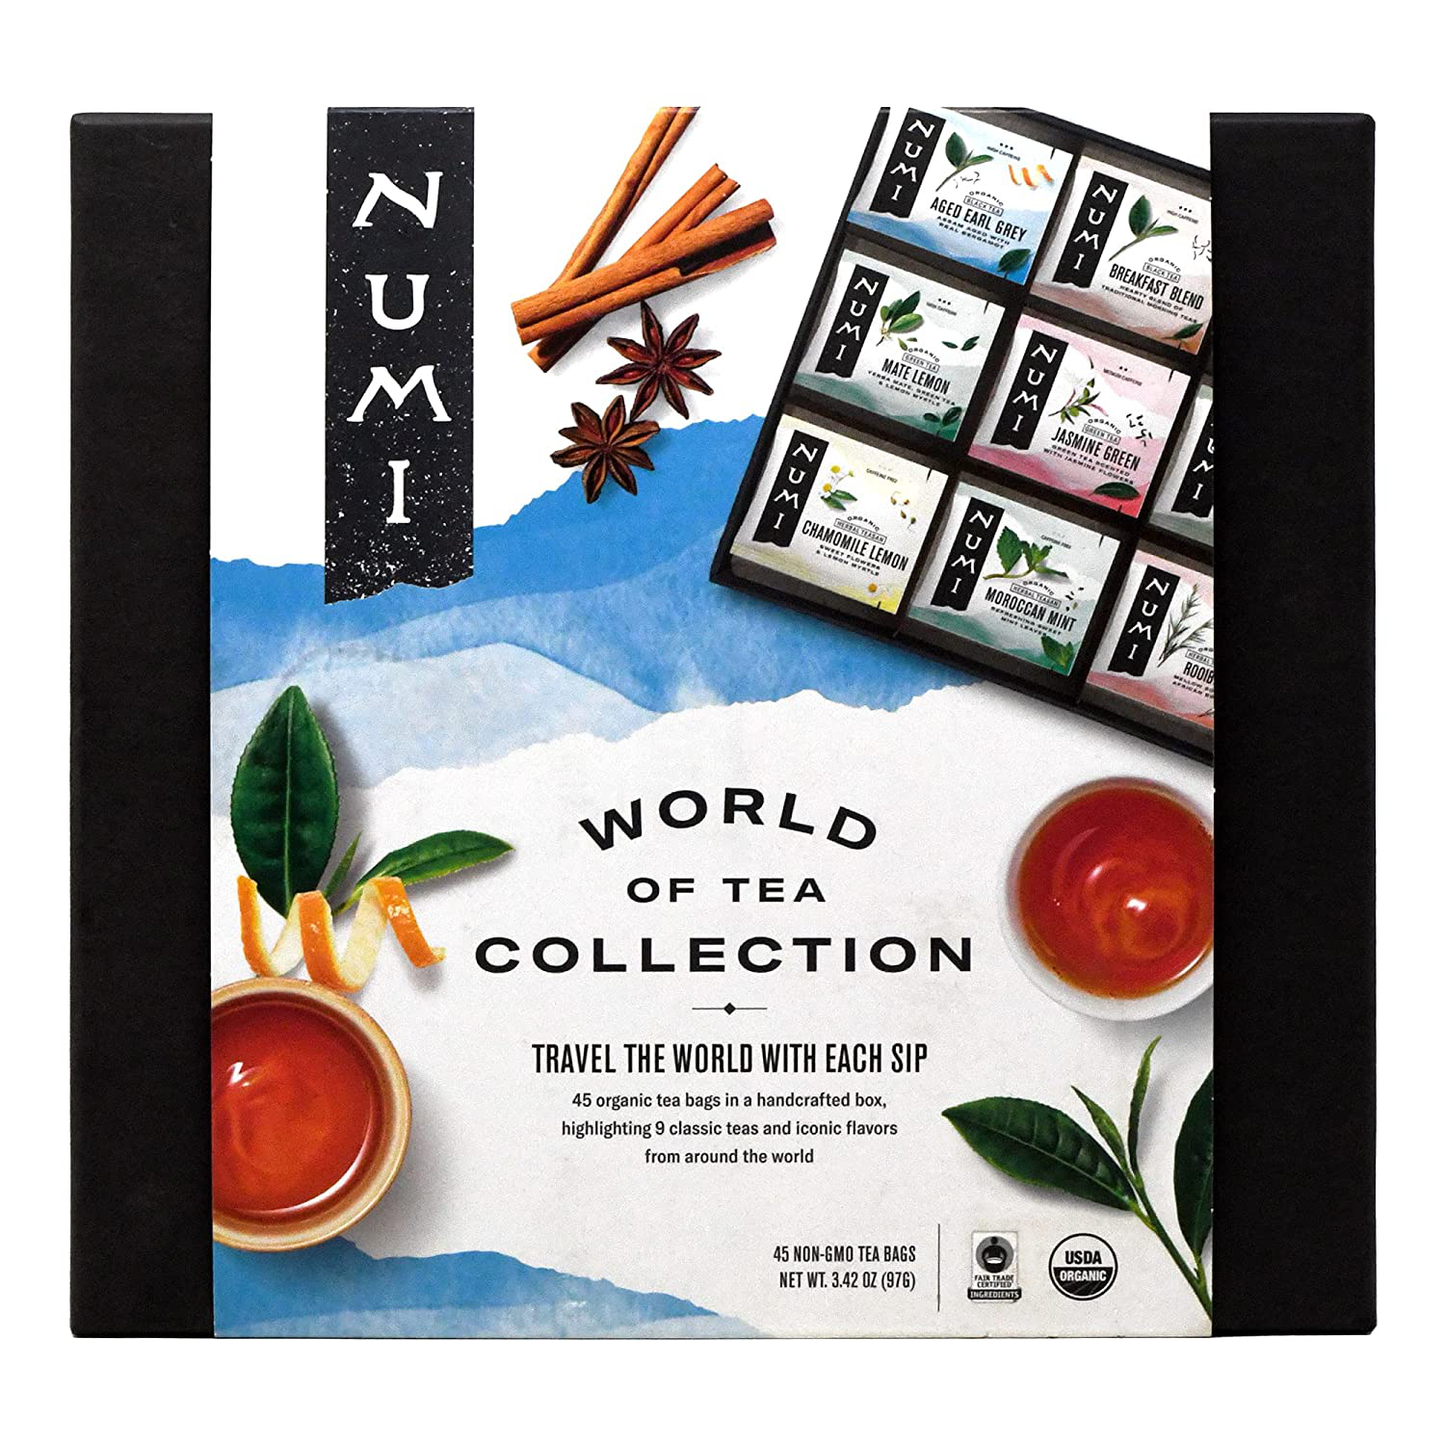 Numi Organic Tea by Mood Gift Set, 40 Count Tea Bag Assortment - Premium Organic Black, Pu-Erh, Green, Mate, Rooibos & Herbal Teas (Packaging May Vary)